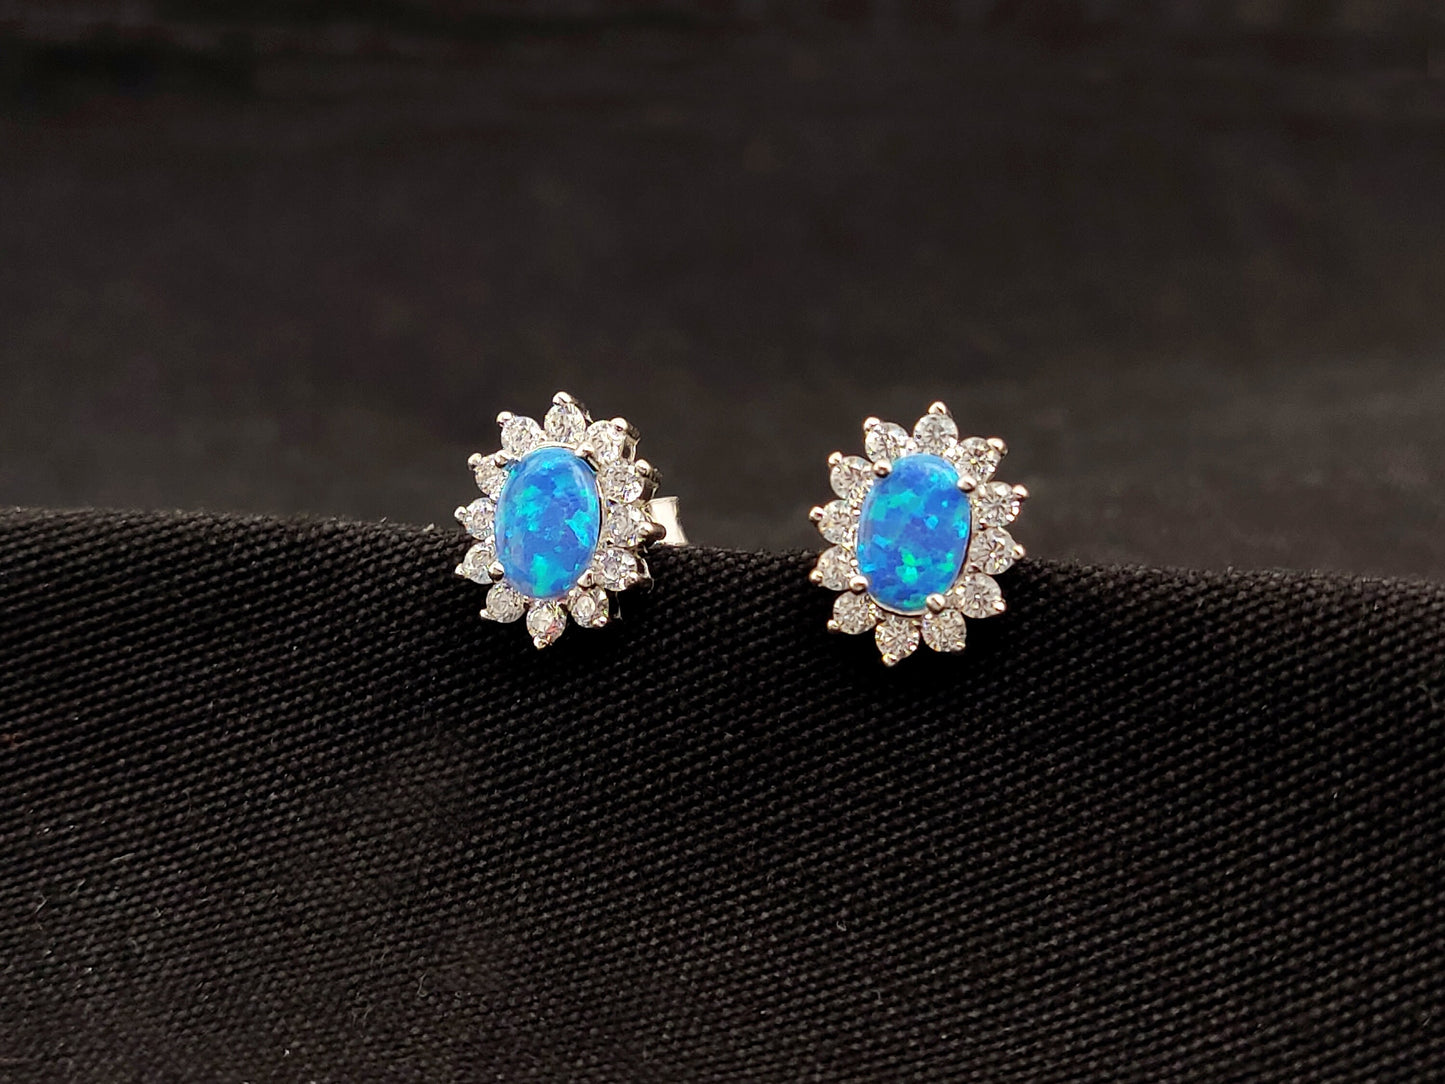 Sterling Silver 925 Oval Rosetta Blue Opal Small Stud Earrings 9x10mm, Opal Crystals Earrings, Griechisches Silber Ohrringe  Bijoux Grecque